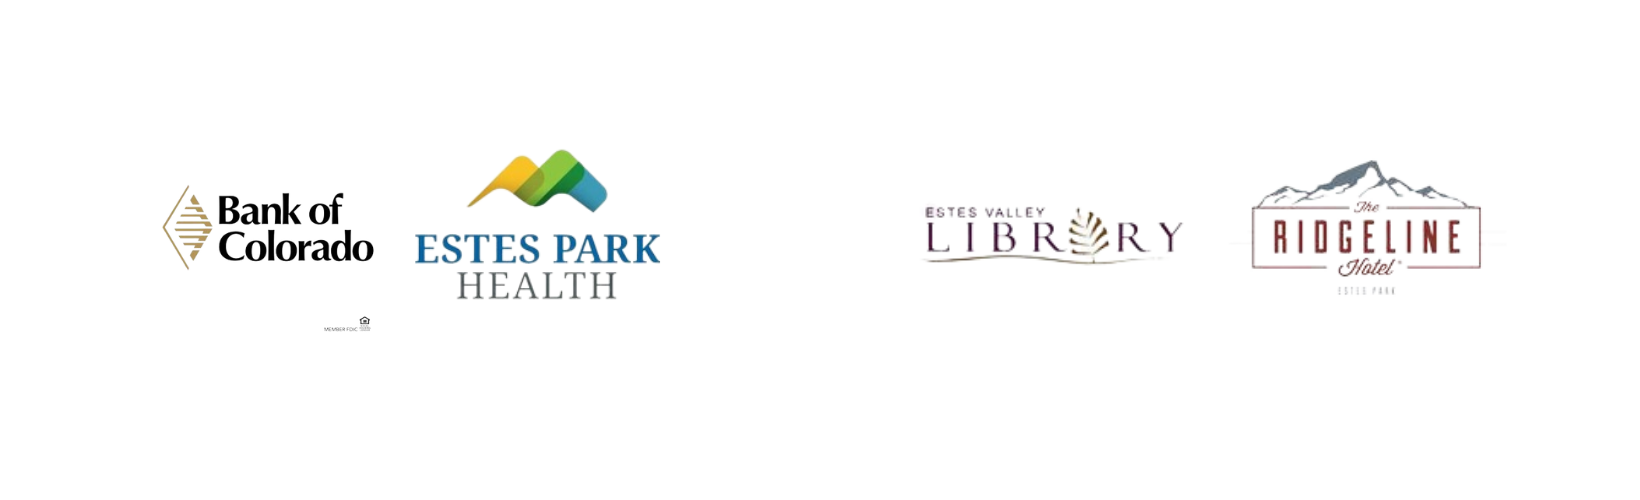 Longs Peak Member Logos(4)